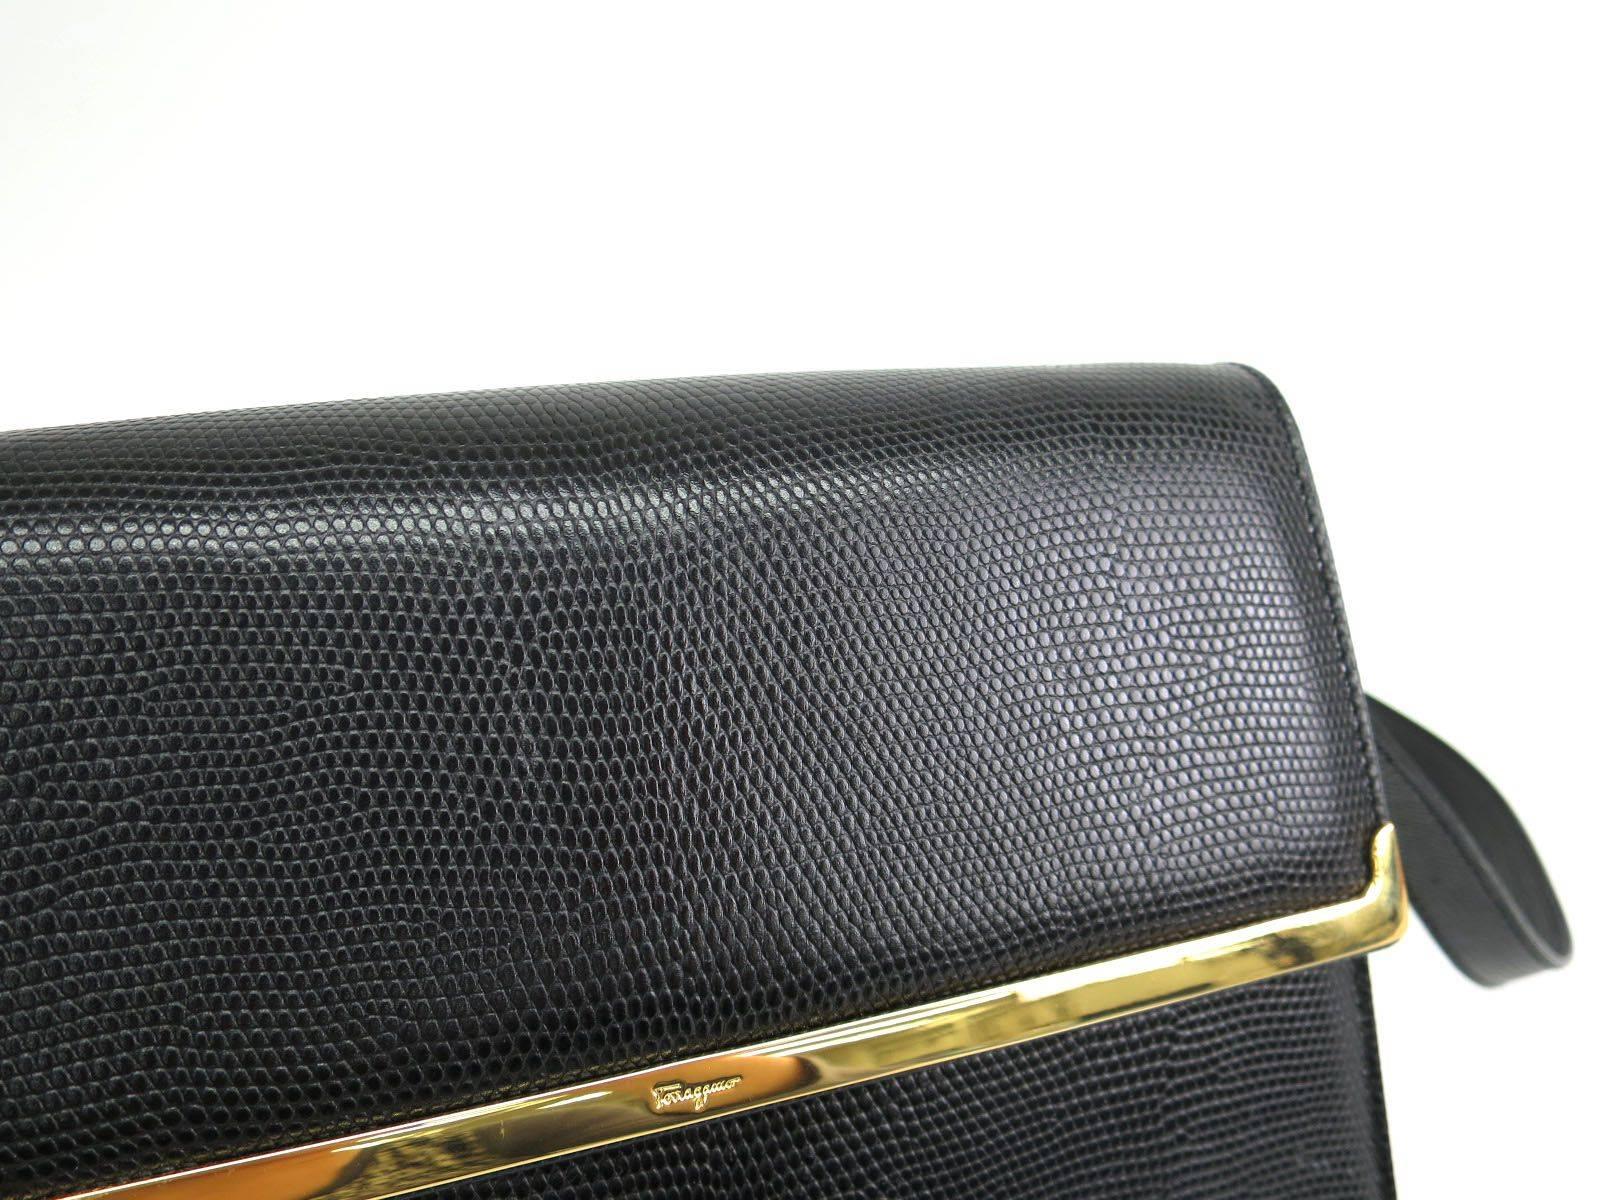 CURATOR'S NOTES

Salvatore Ferragamo Black Leather Flap Gold Hardware Crossbody Shoulder Bag 

Leather
Gold hardware
Magnet closure
Made in Italy
Measures 8.7" W x  6.7" H x 3" D 
Removable and adjustable shoulder strap